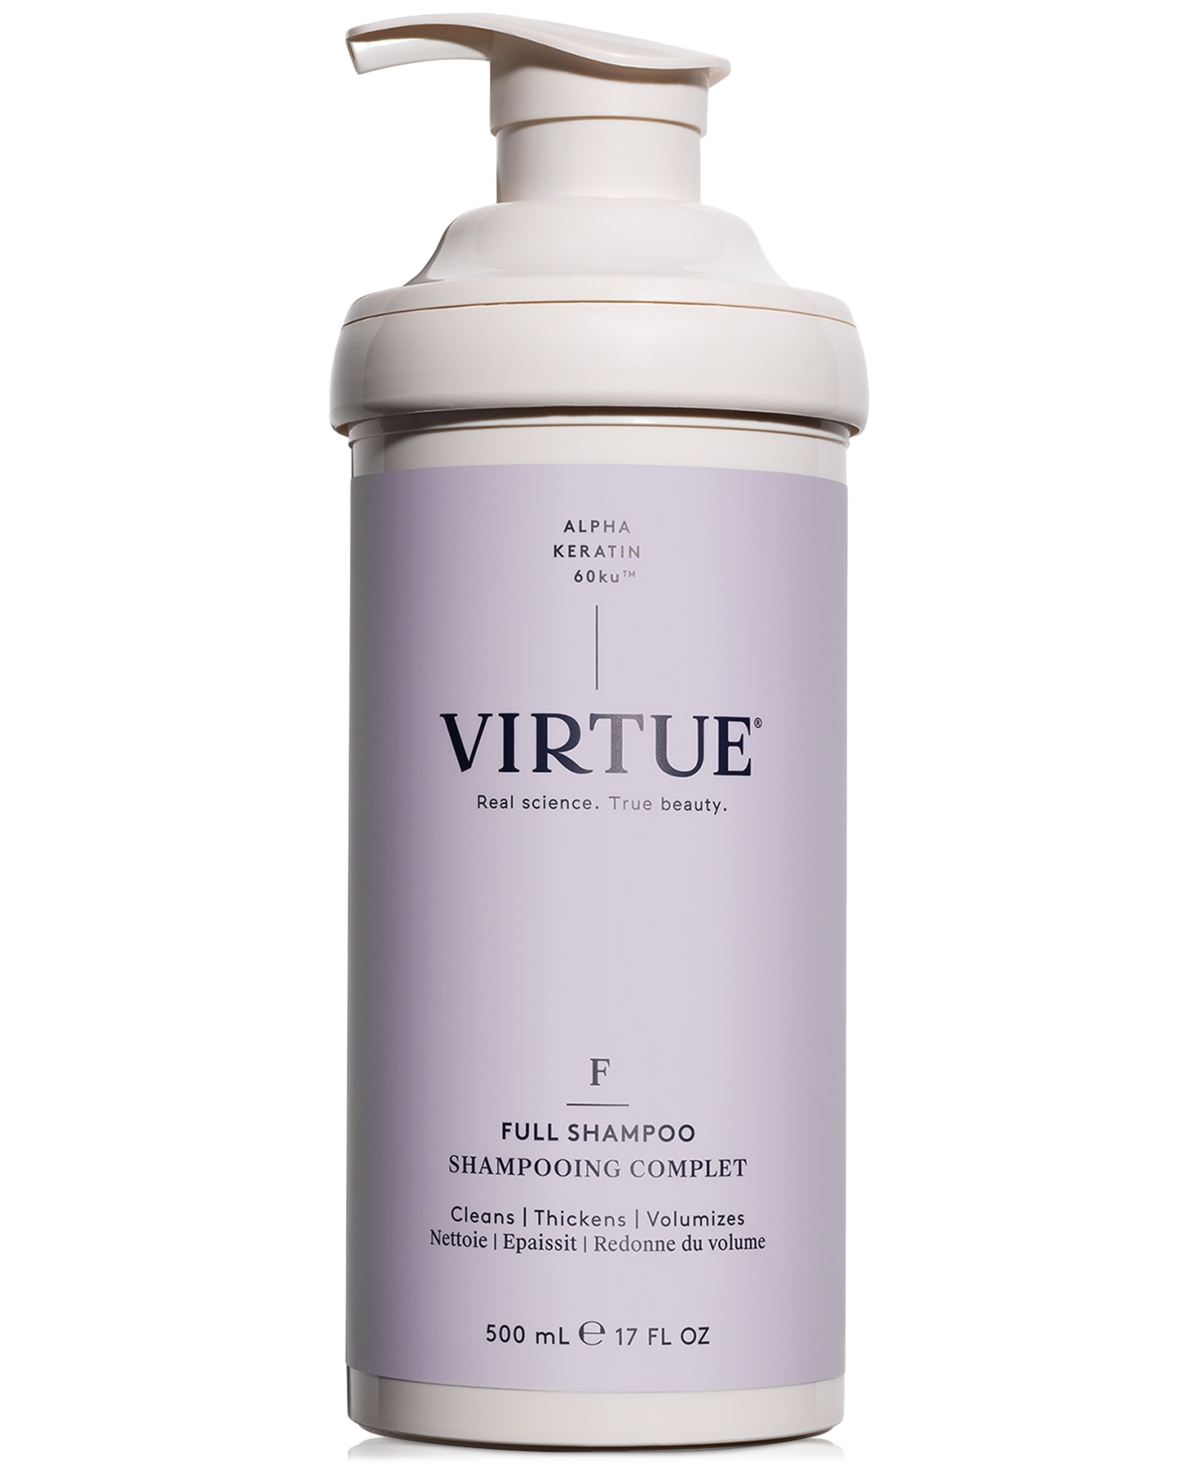 Virtue Full Shampoo, 17 Oz.